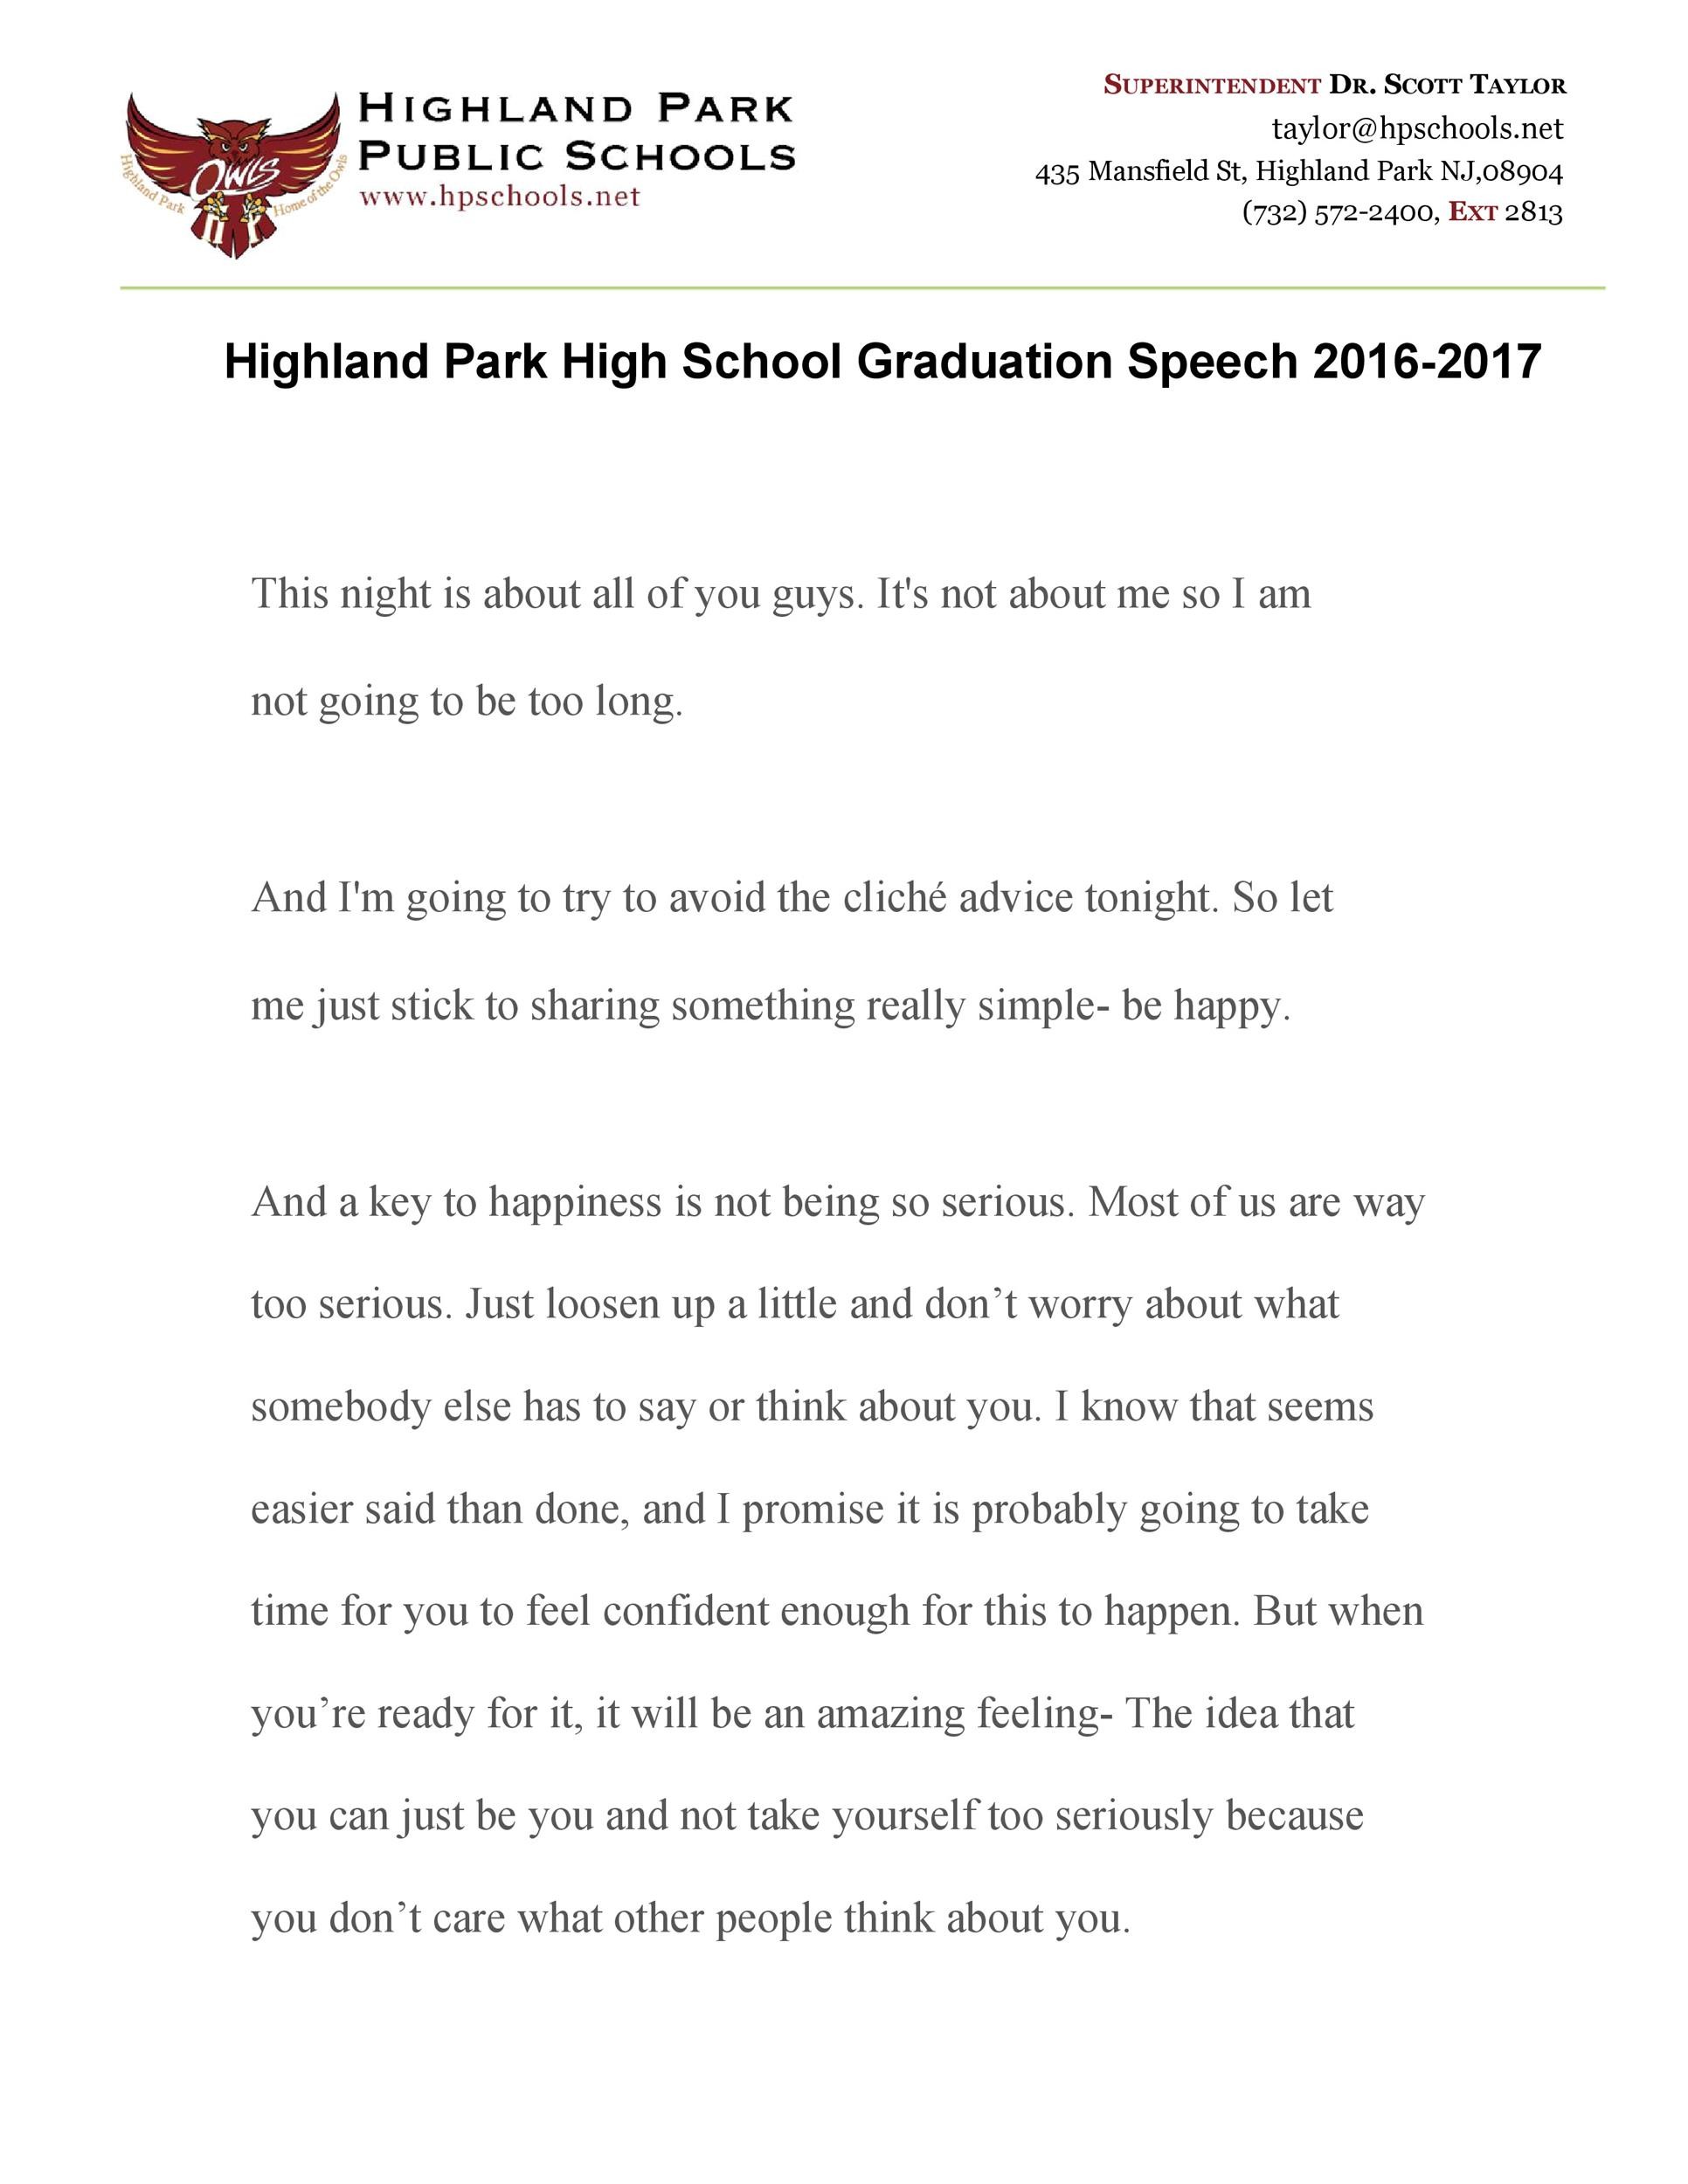 Free graduation speech example 37